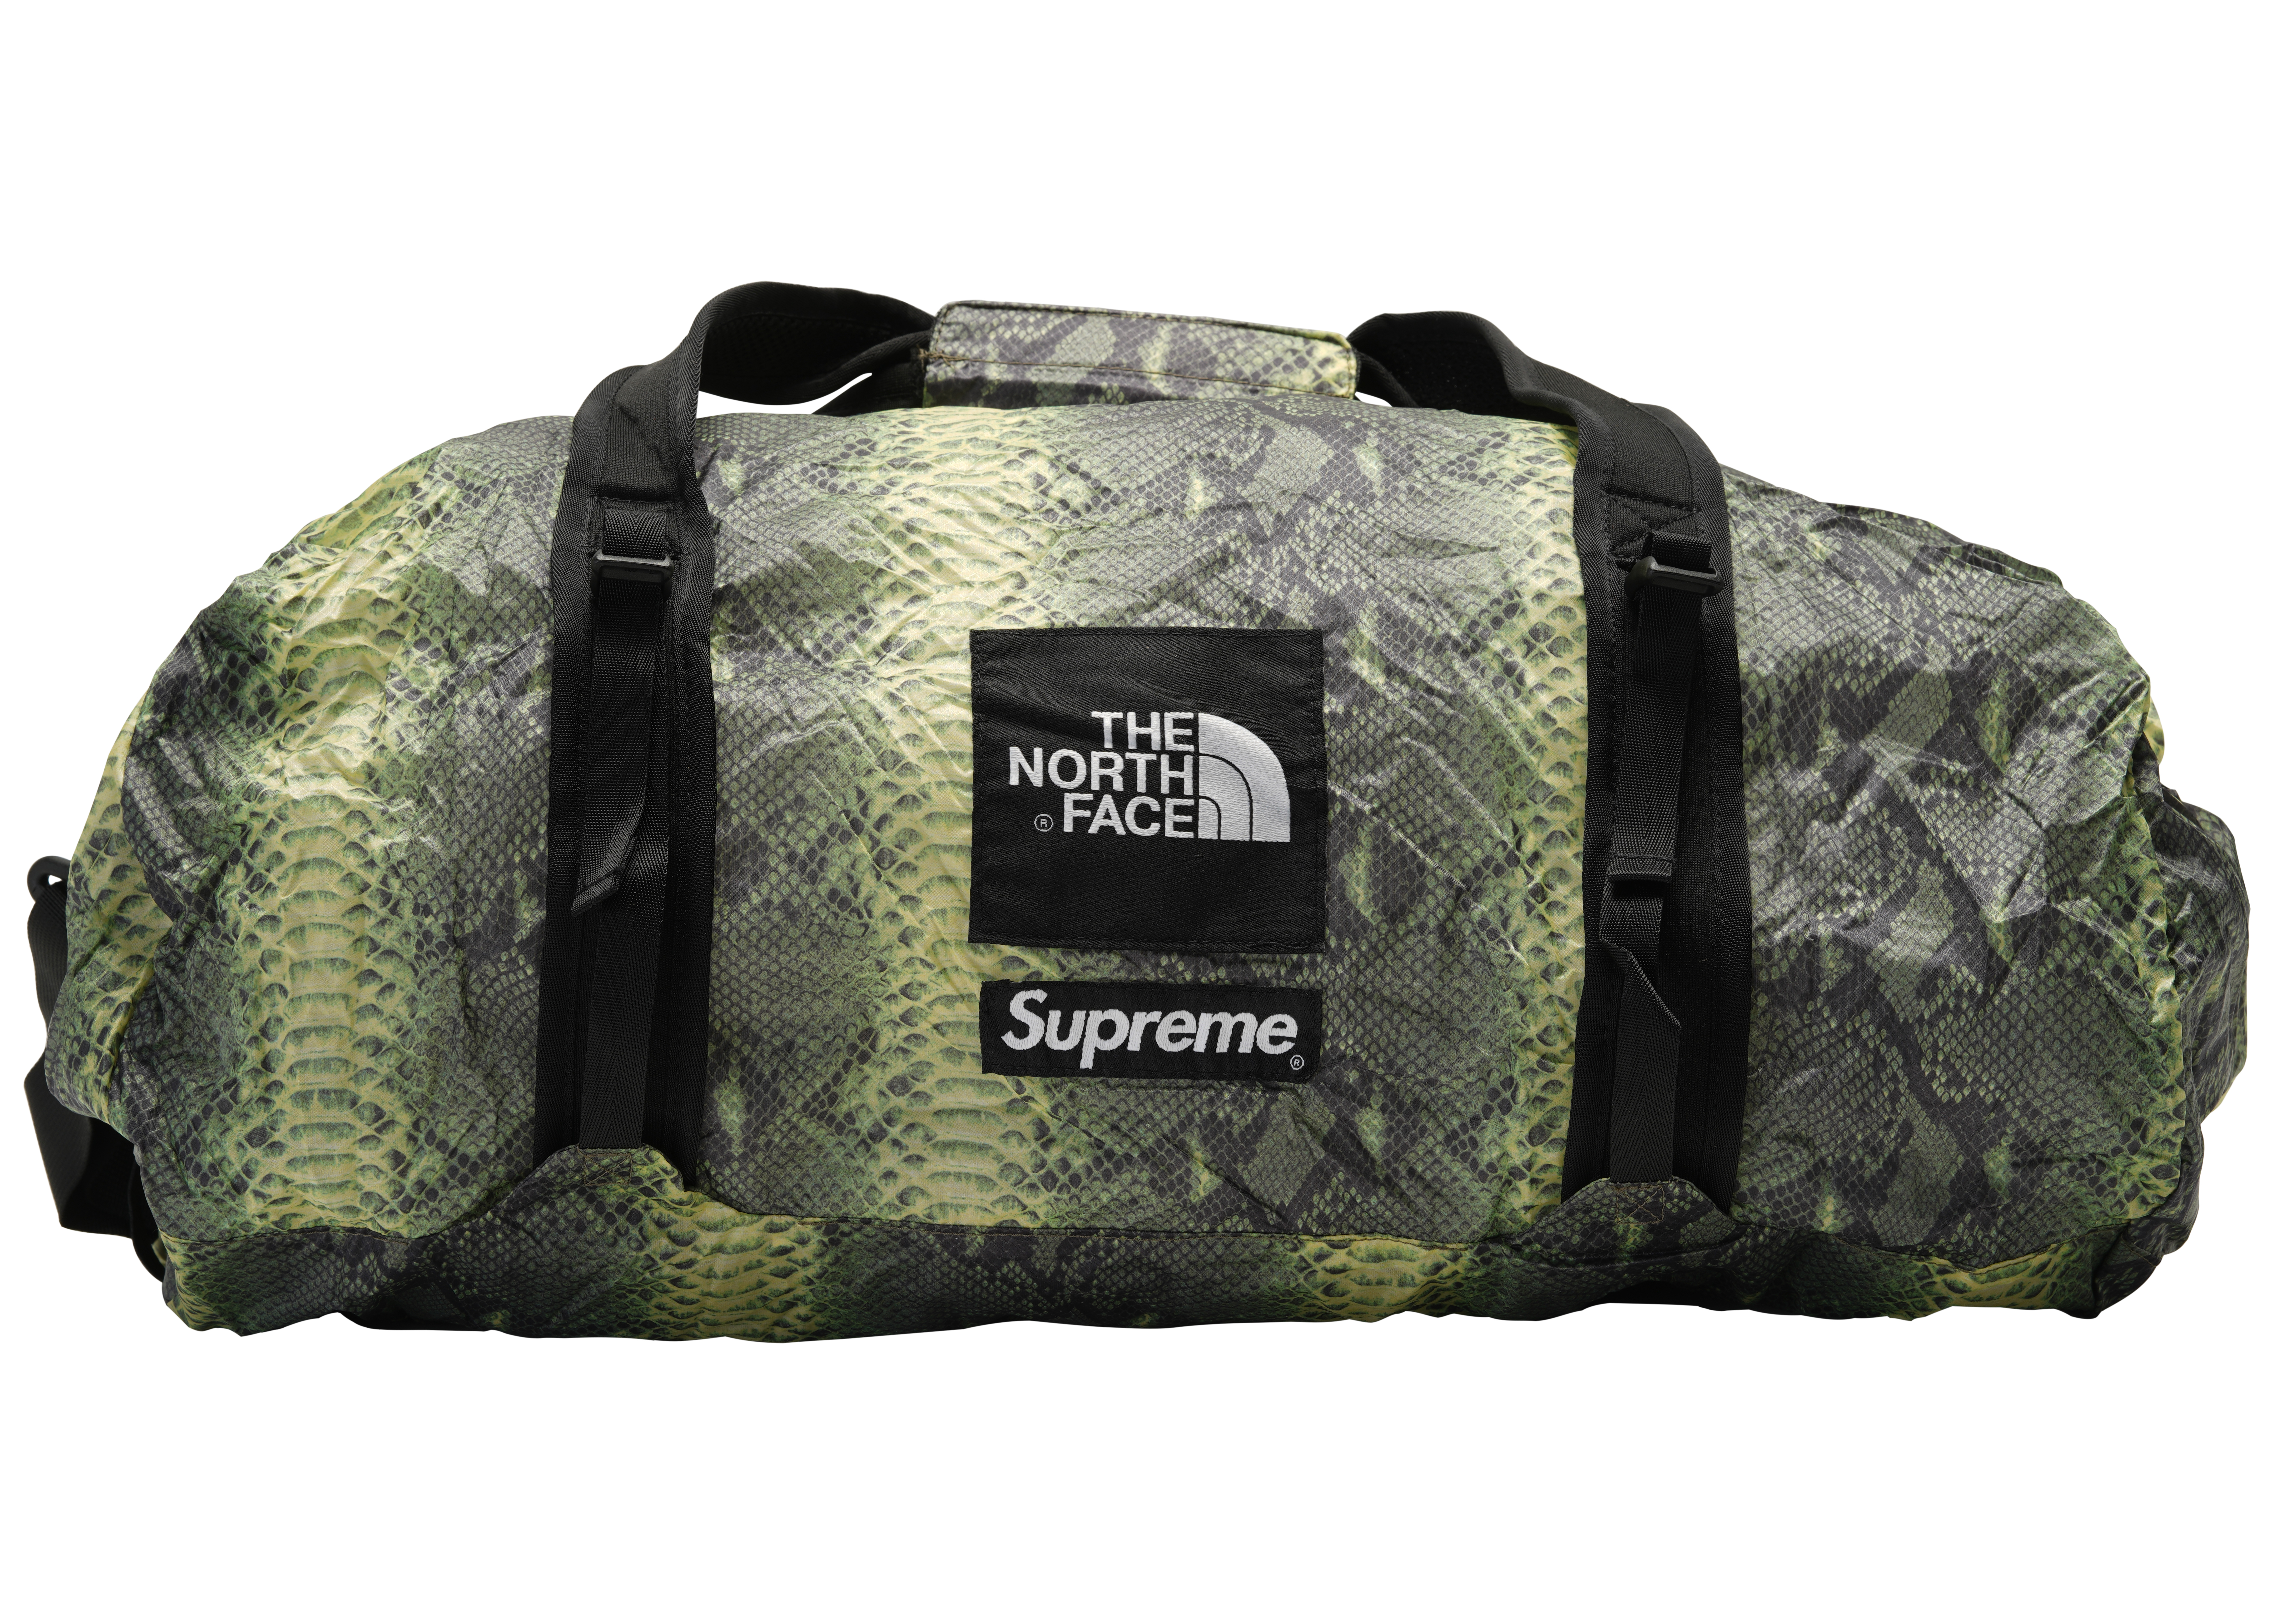 Supreme NORTHFACE Duffle Bag